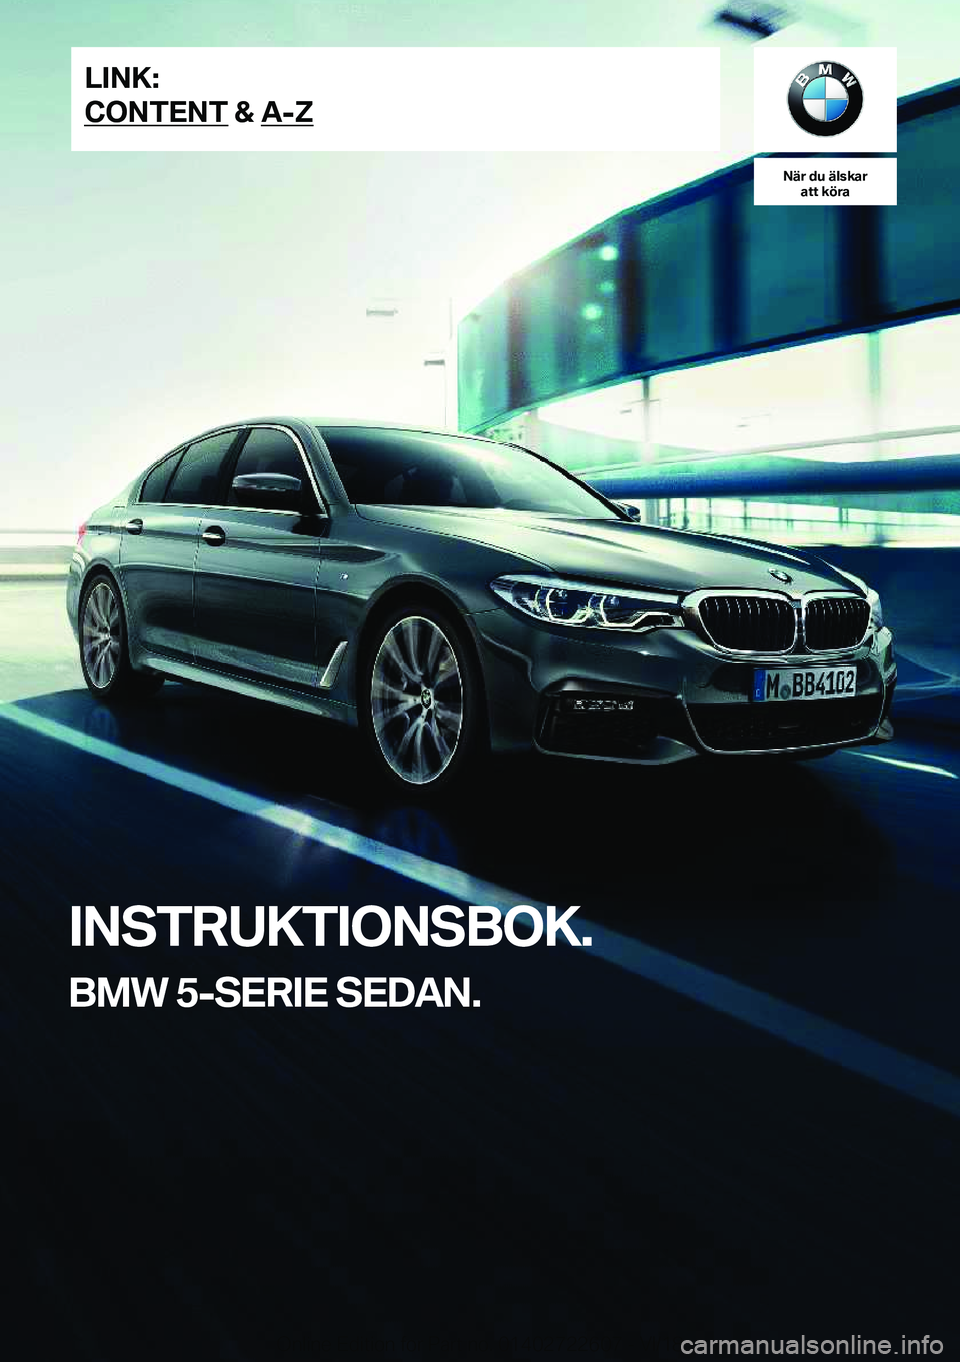 BMW 5 SERIES 2019  InstruktionsbÖcker (in Swedish) �N�ä�r��d�u��ä�l�s�k�a�r�a�t�t��k�